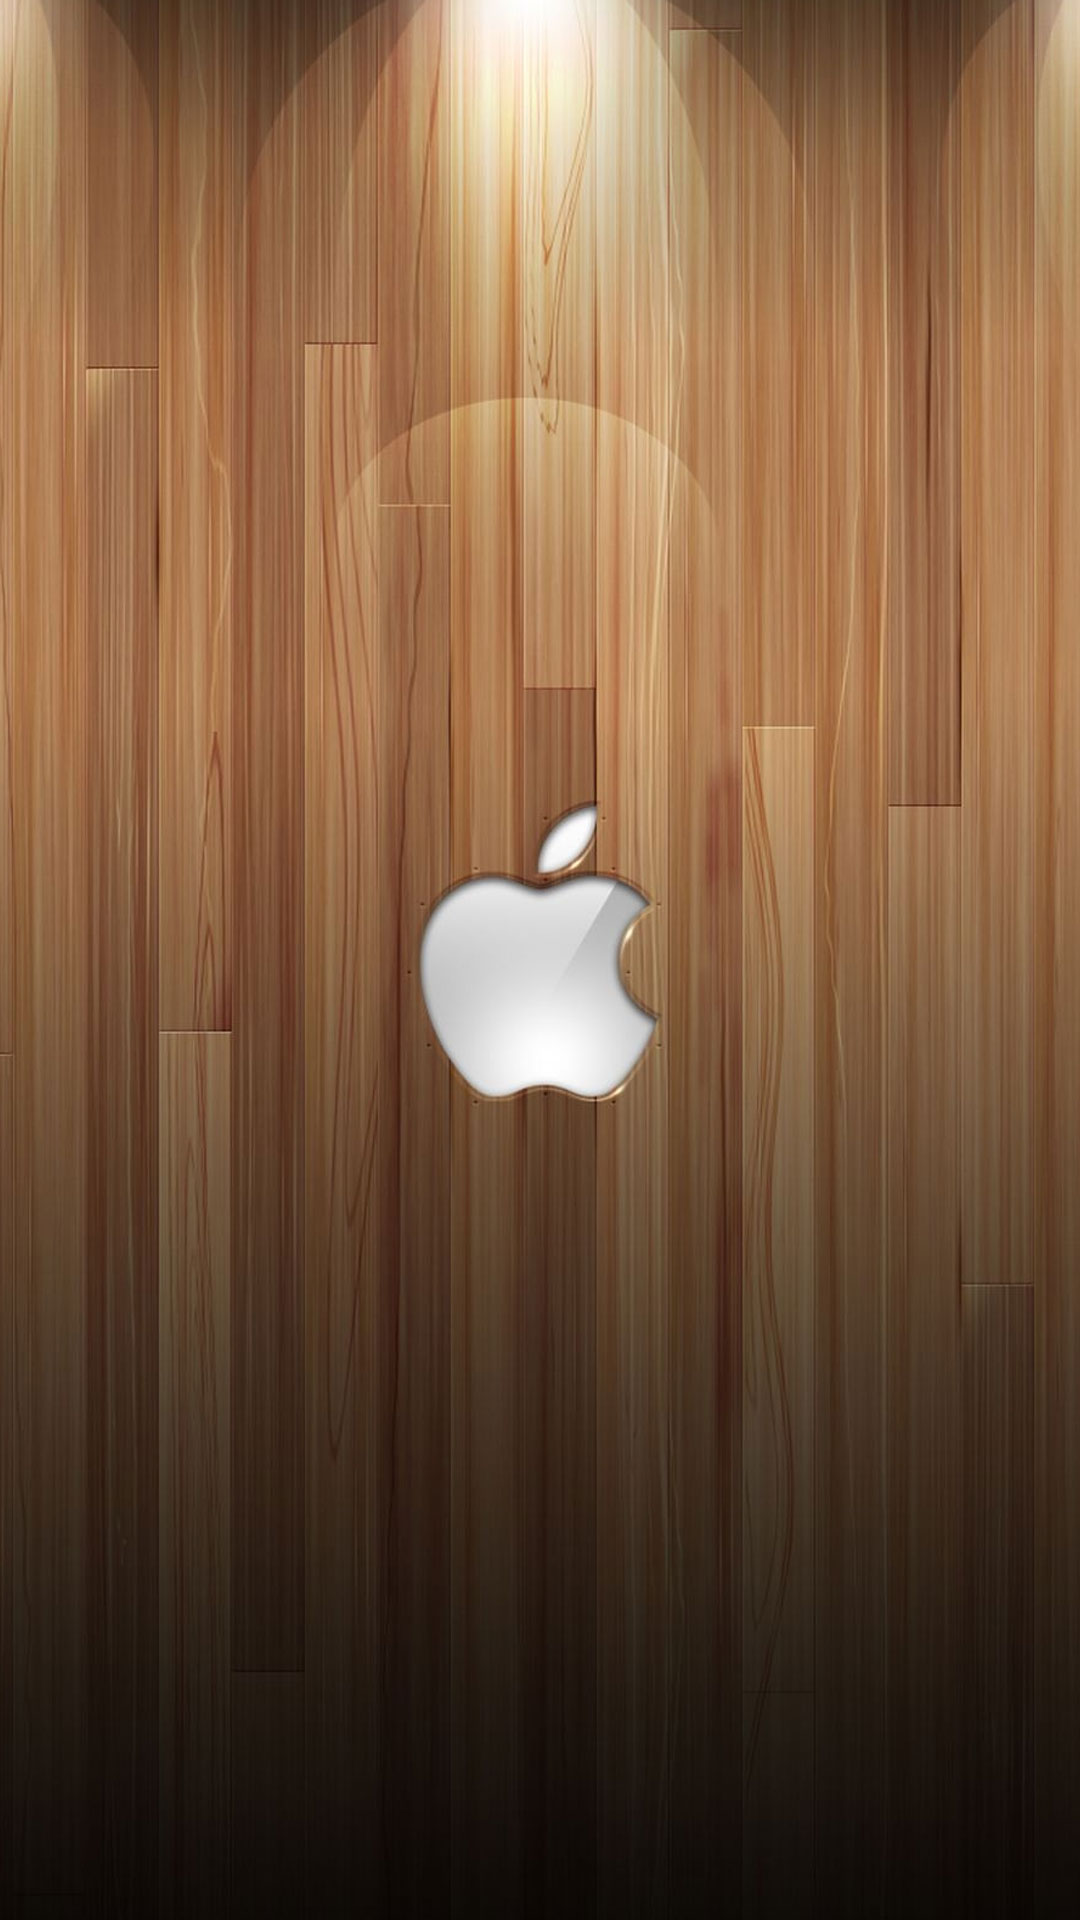 Beautiful Apple iPhone Plus Wallpaper Retina Ready By Designbolts